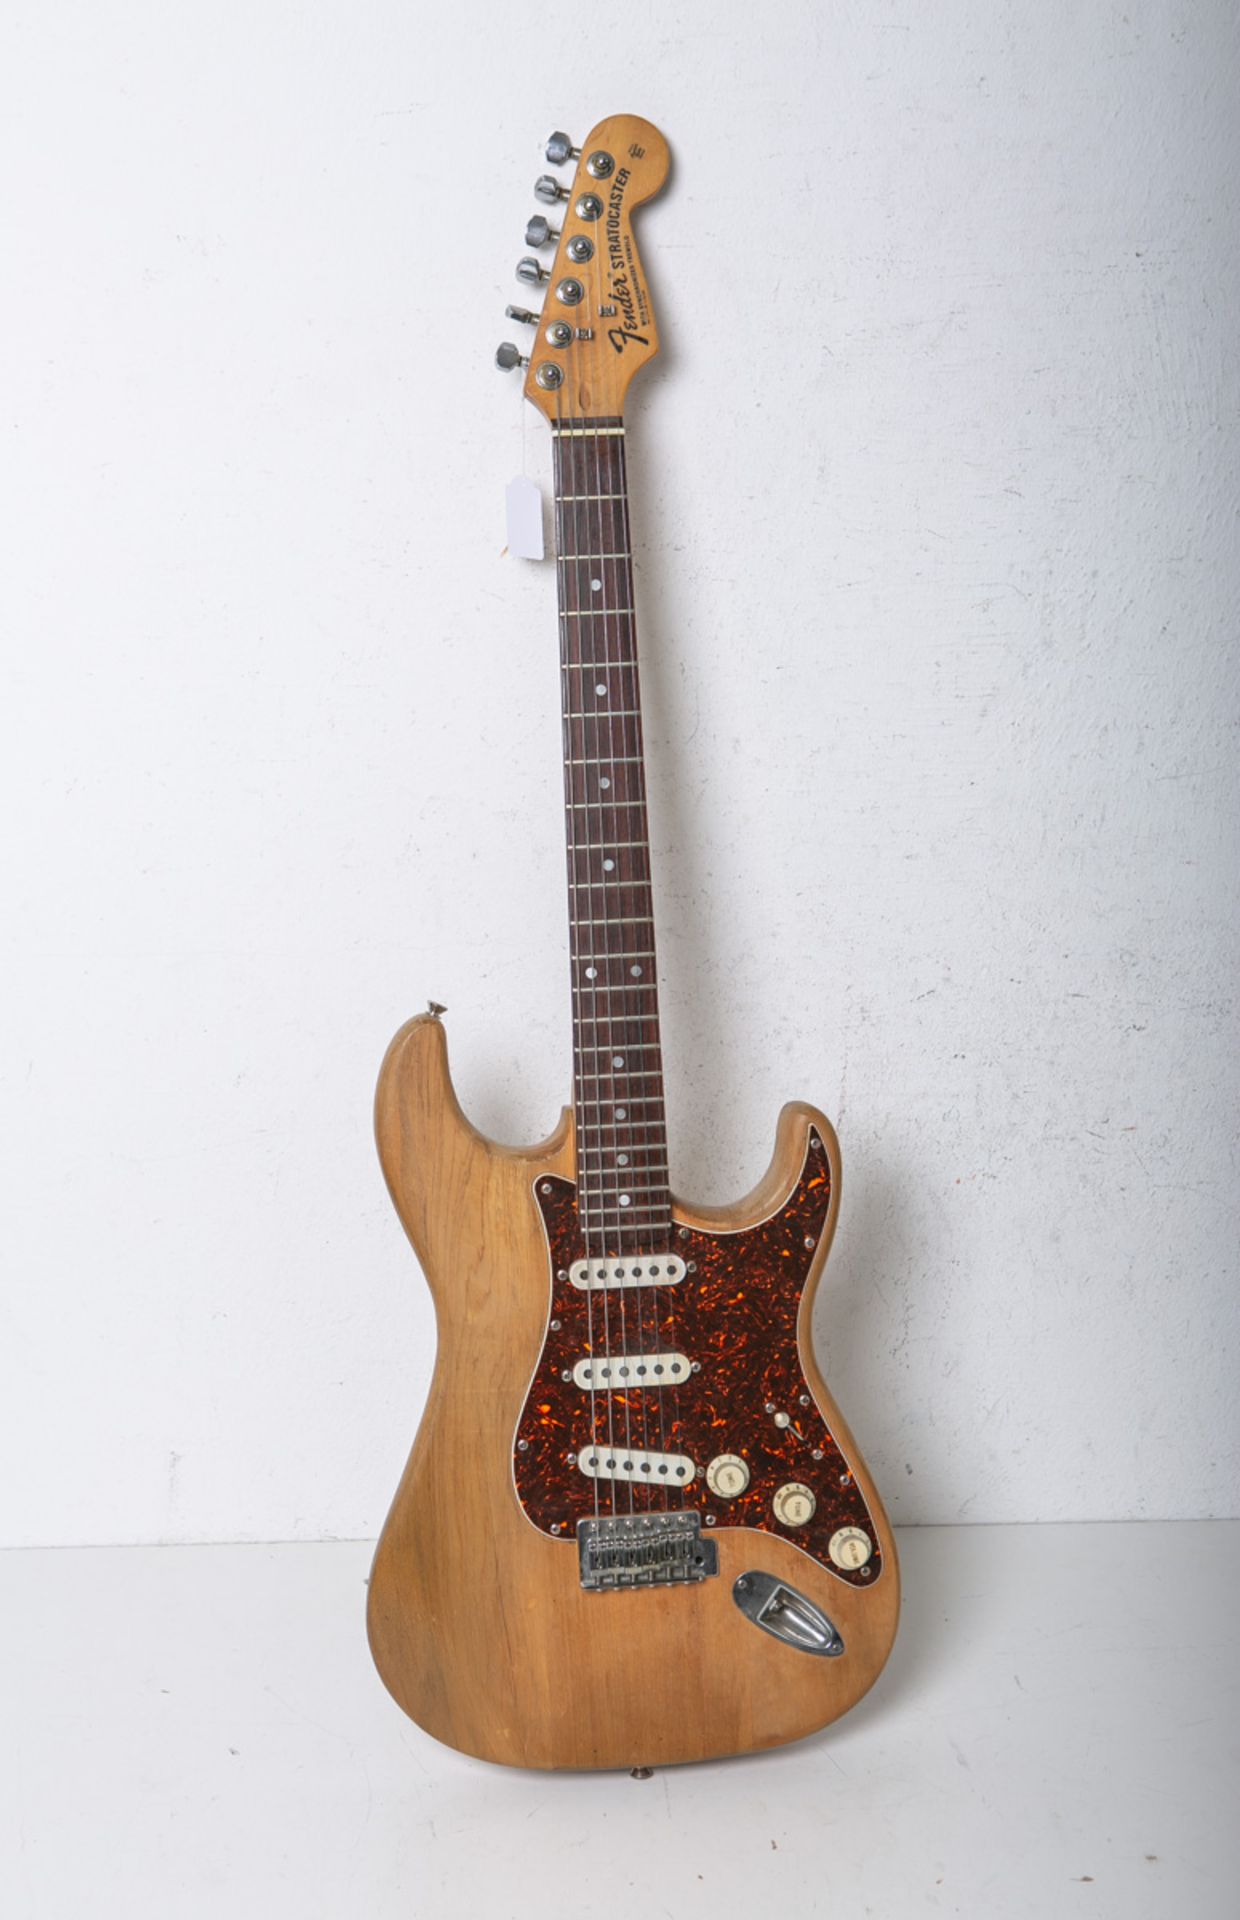 E-Gitarre "Fender Stratocaster Synchronized Tremolo" (China) - Image 2 of 2